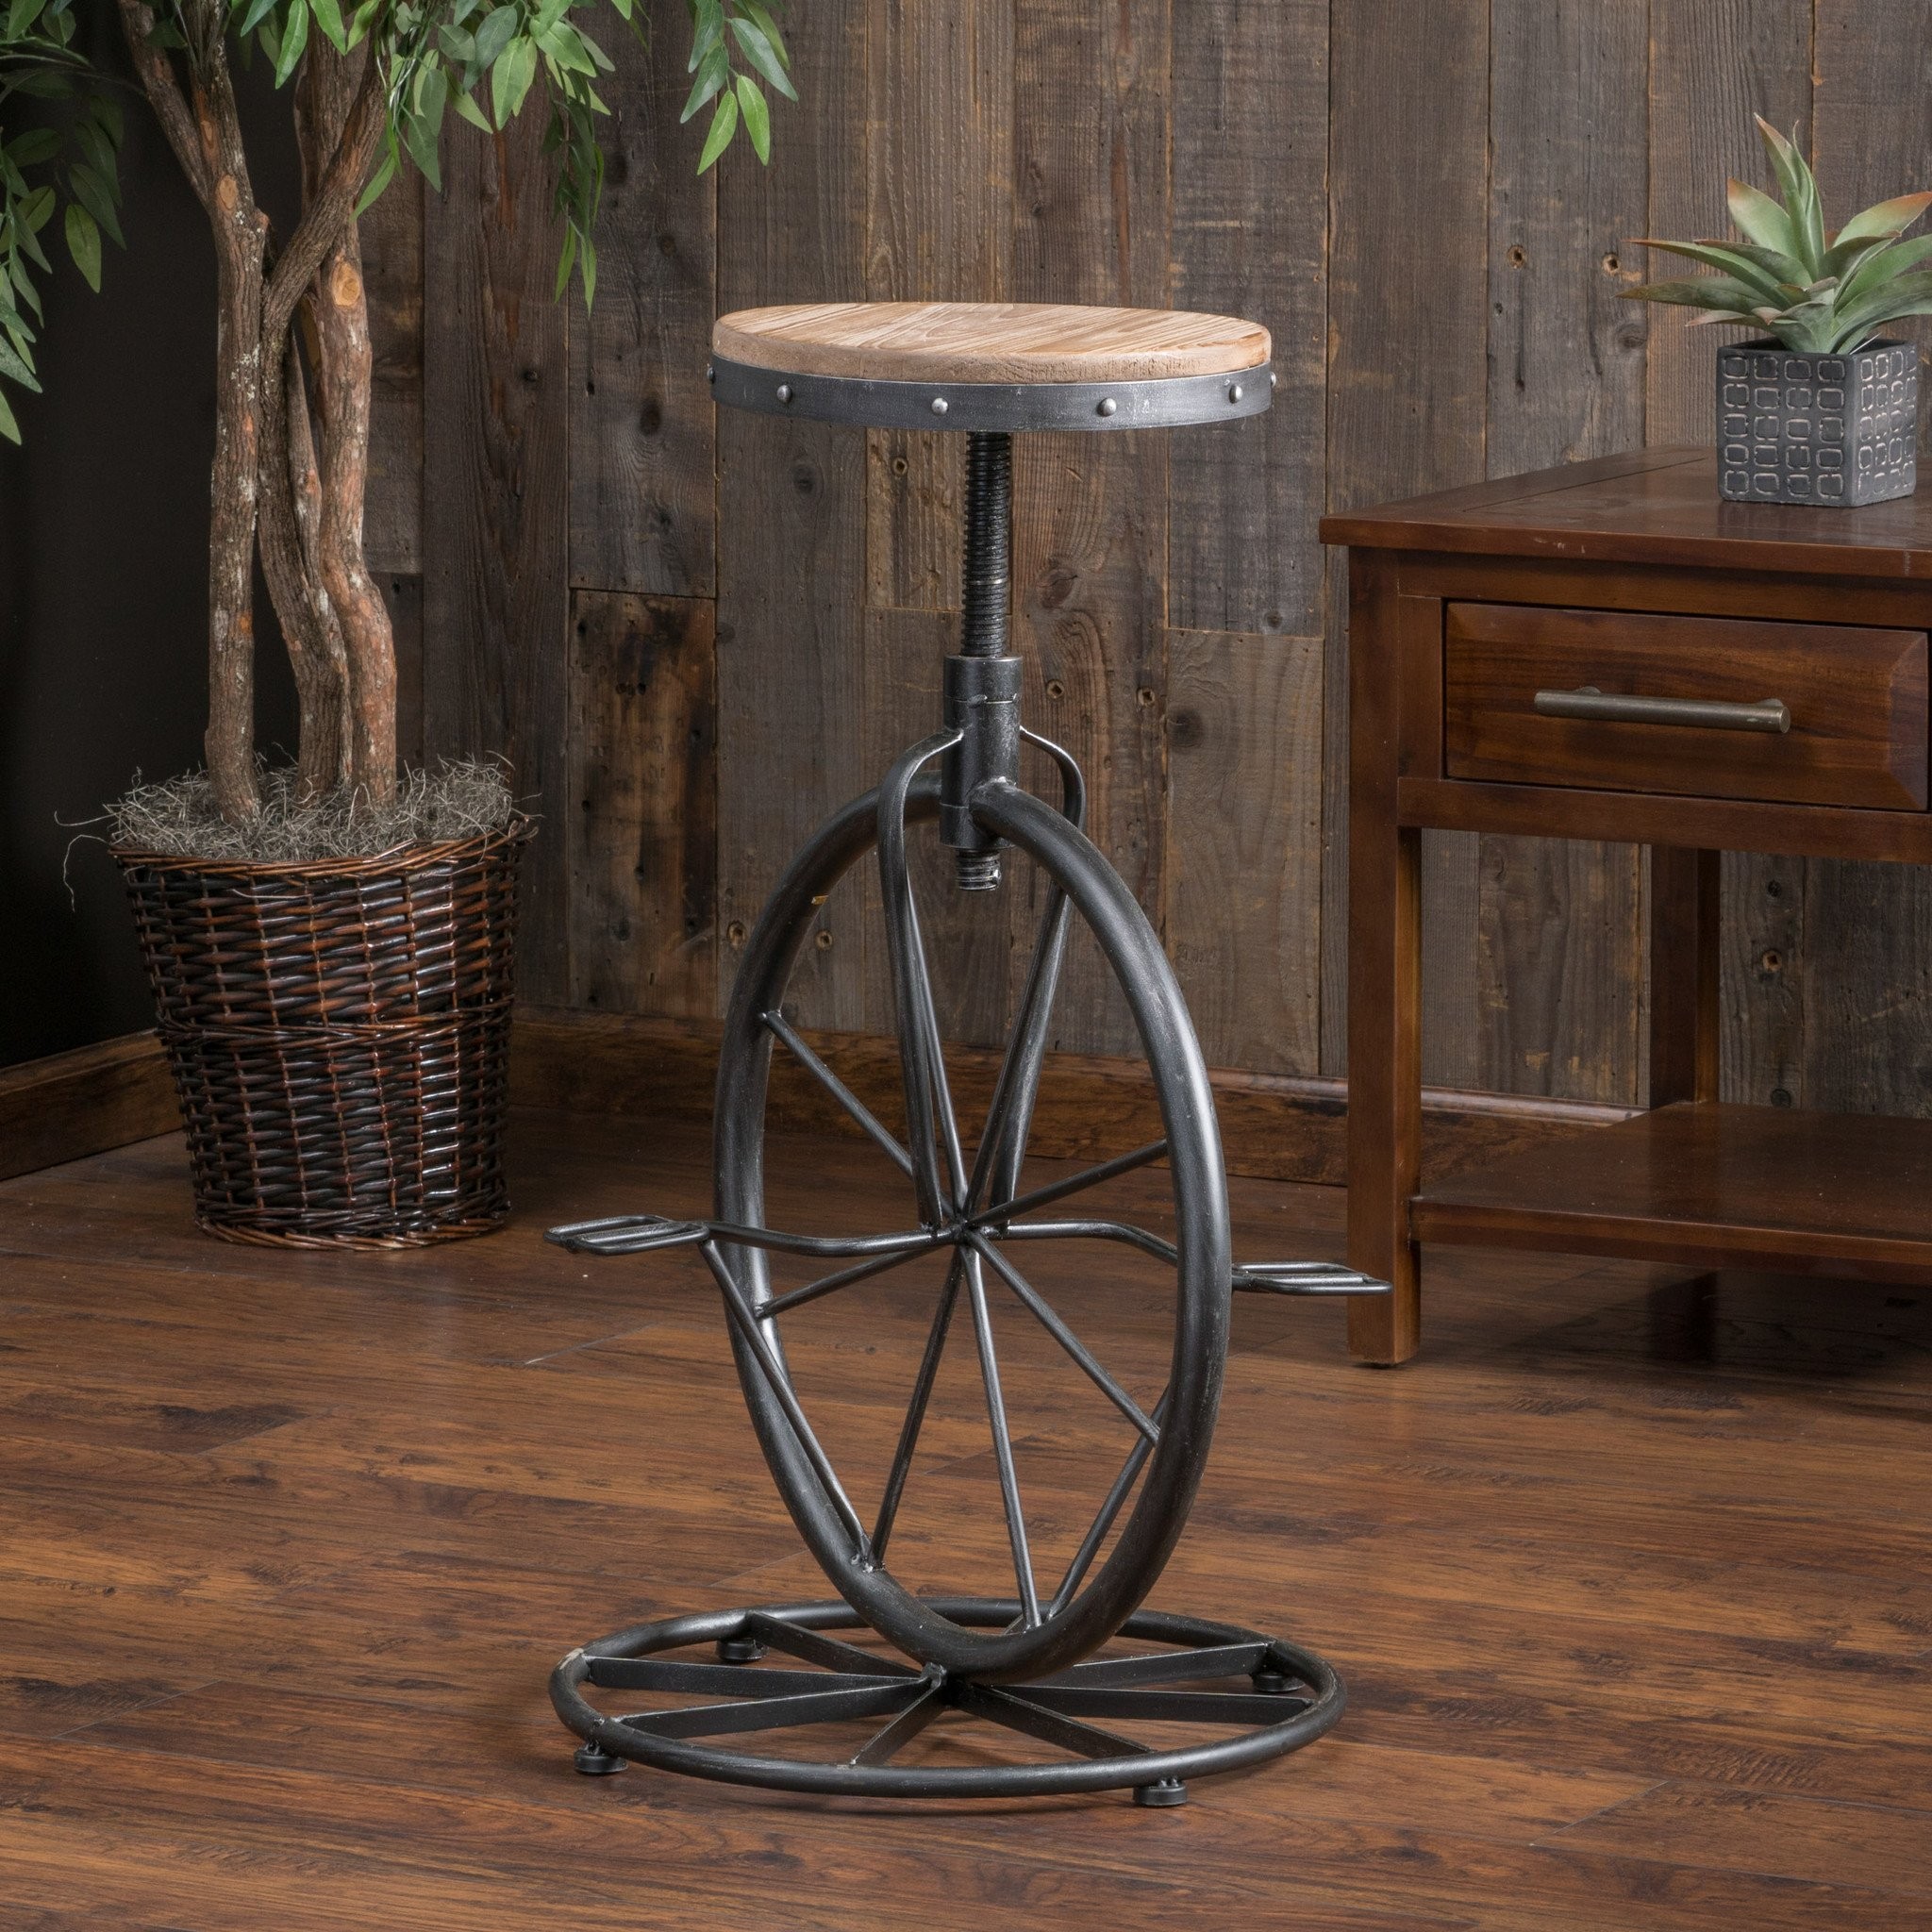 Charles Bicycle Wheel Adjustable Bar Stool